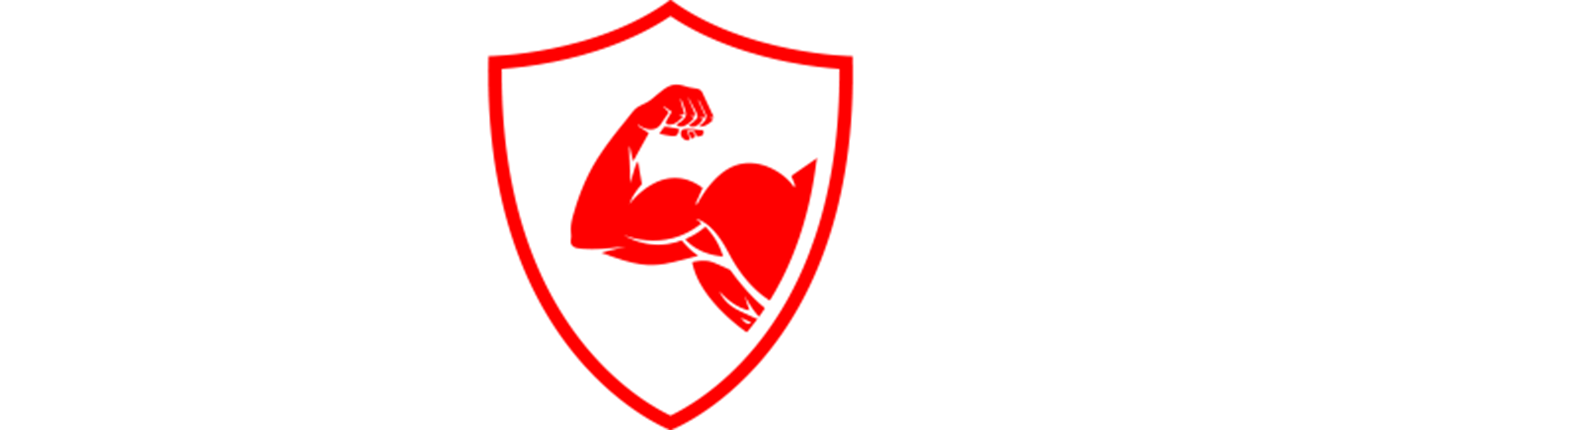 hero fitness logo